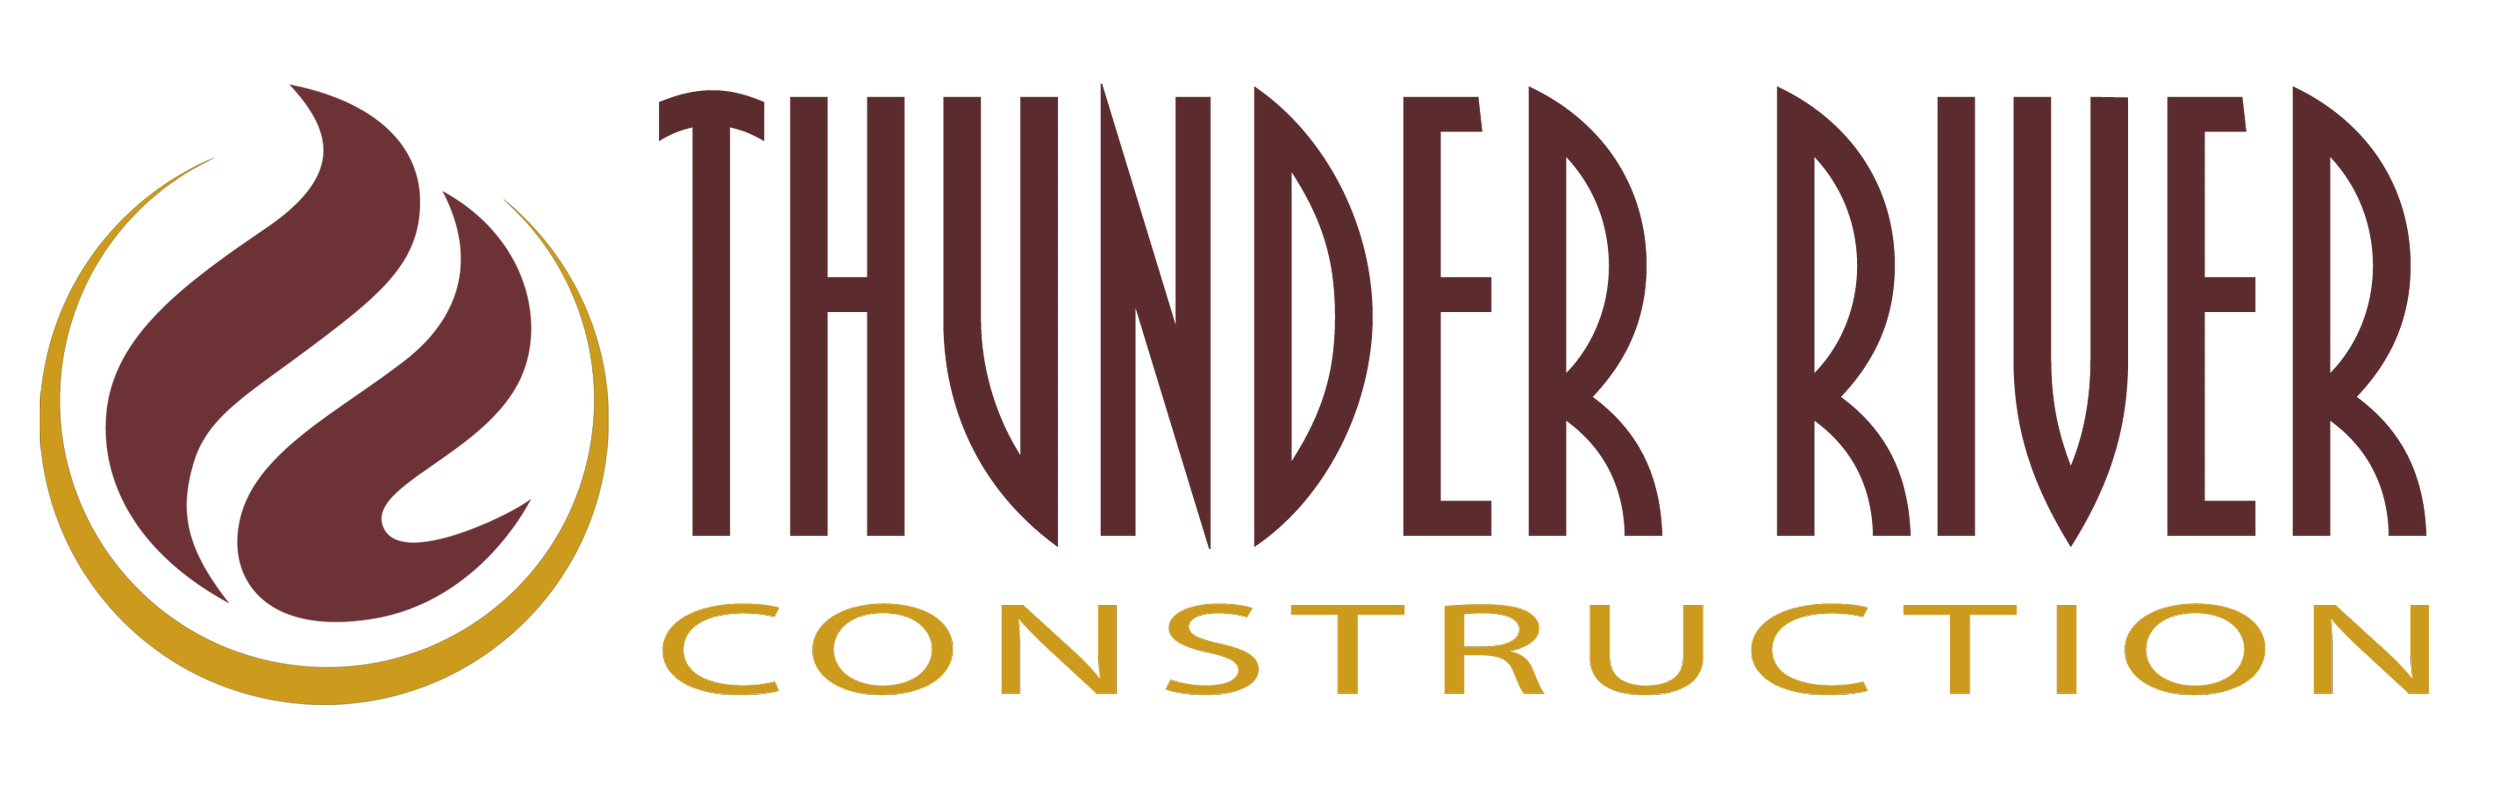 THUNDER RIVER CONSTRUCTION